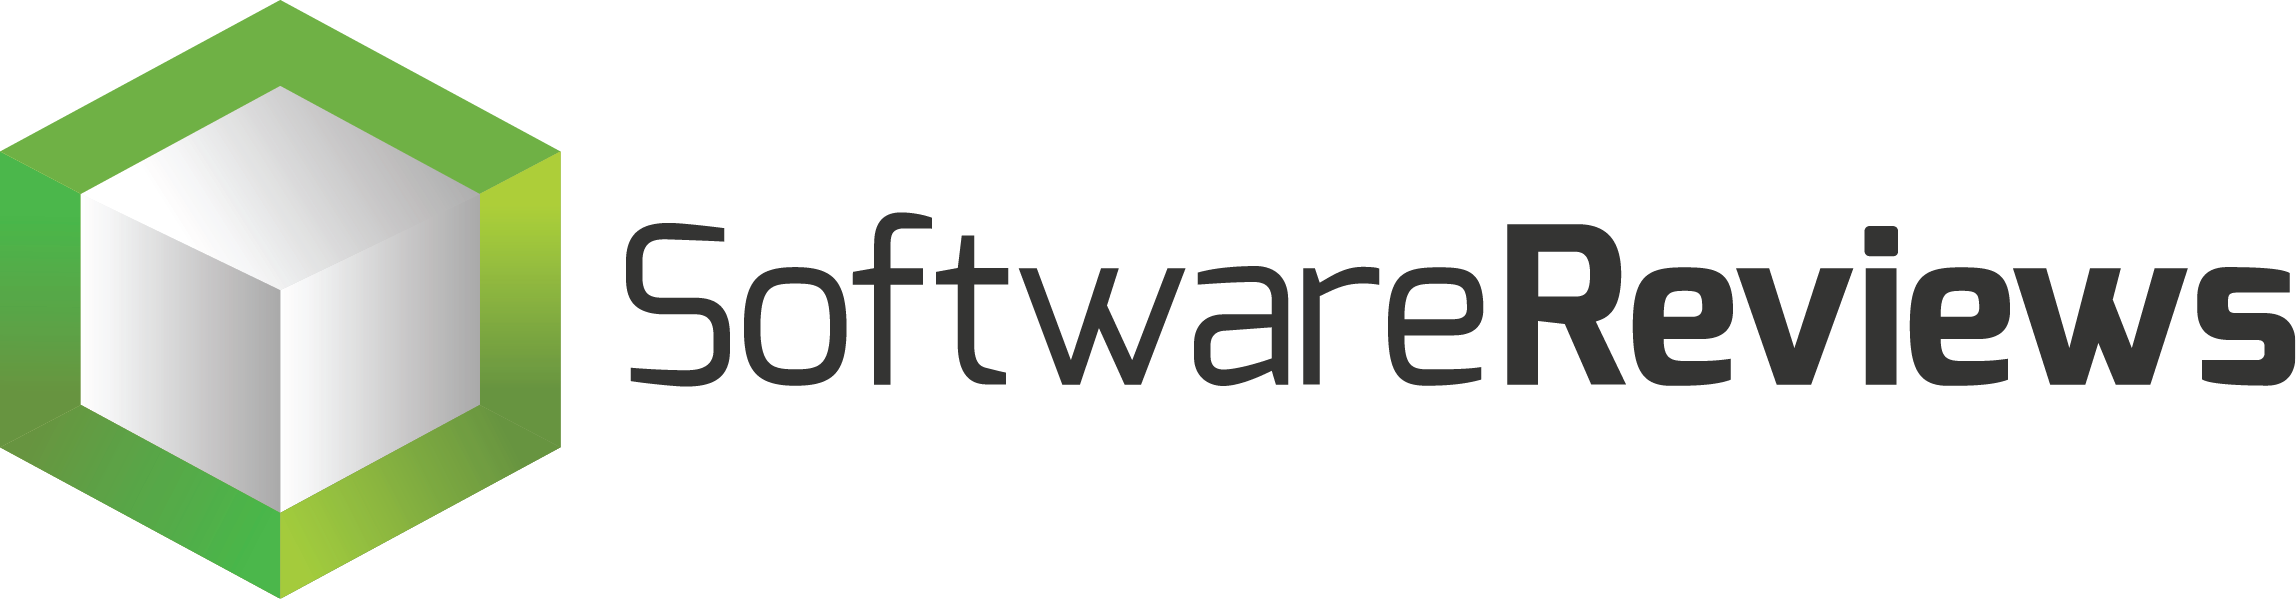 SoftwareReviews